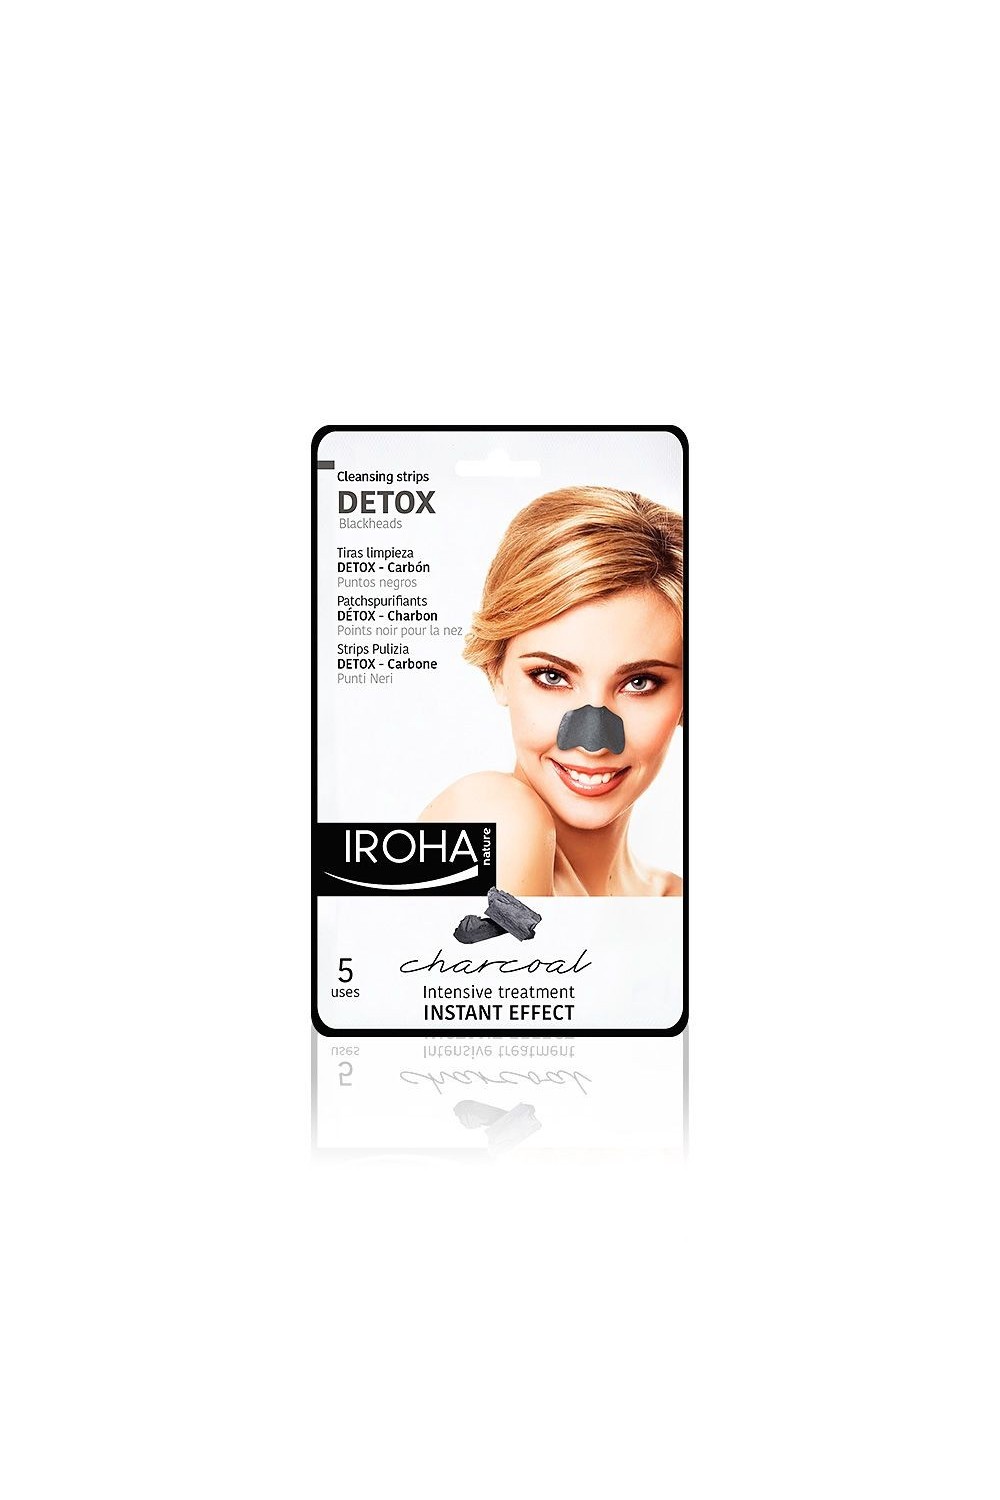 Iroha Nature Detox Nose Strips Remove Blackheads 5 Units